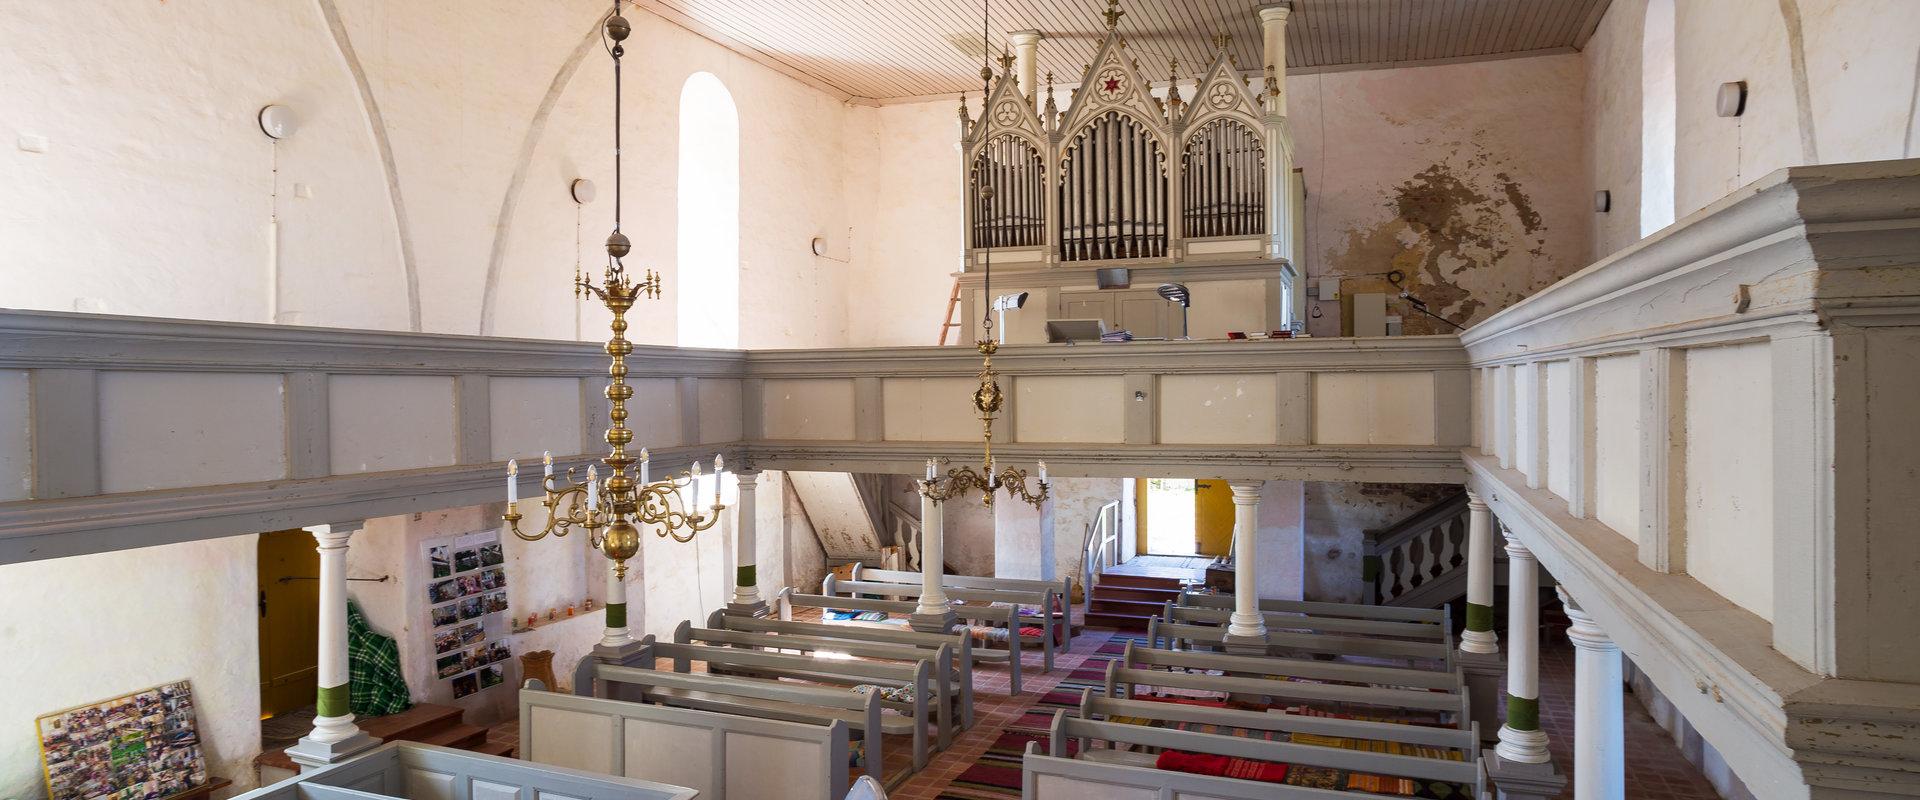 Puhja Church, organ